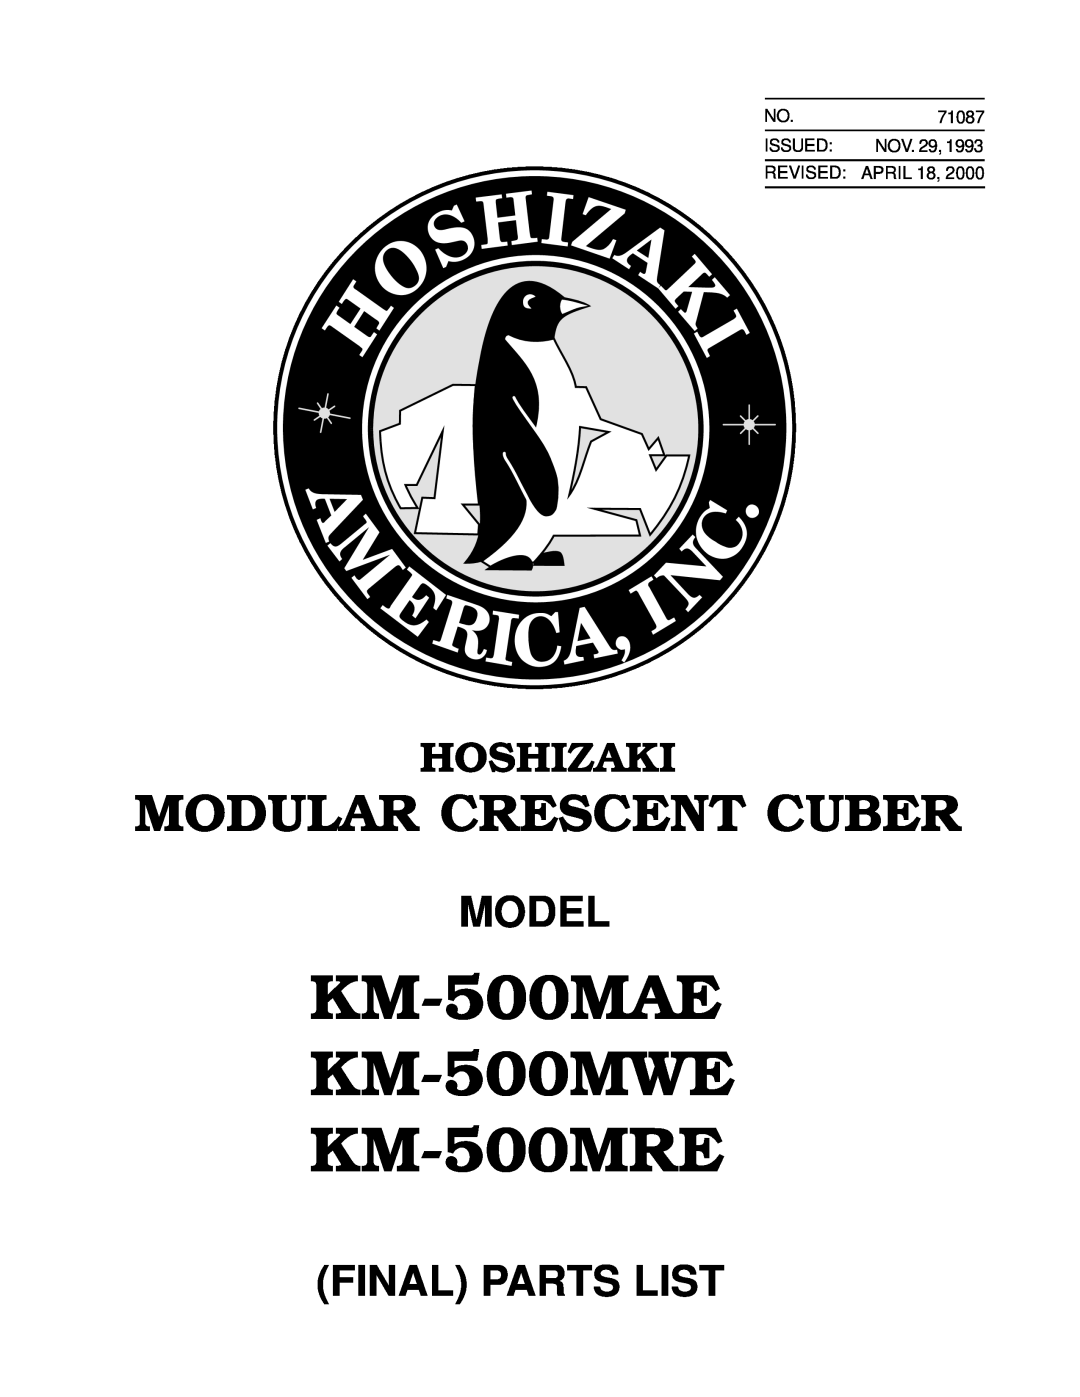 Hoshizaki manual KM-500MAE KM-500MWE KM-500MRE, Modular Crescent Cuber, Hoshizaki, Model, Final Parts List 